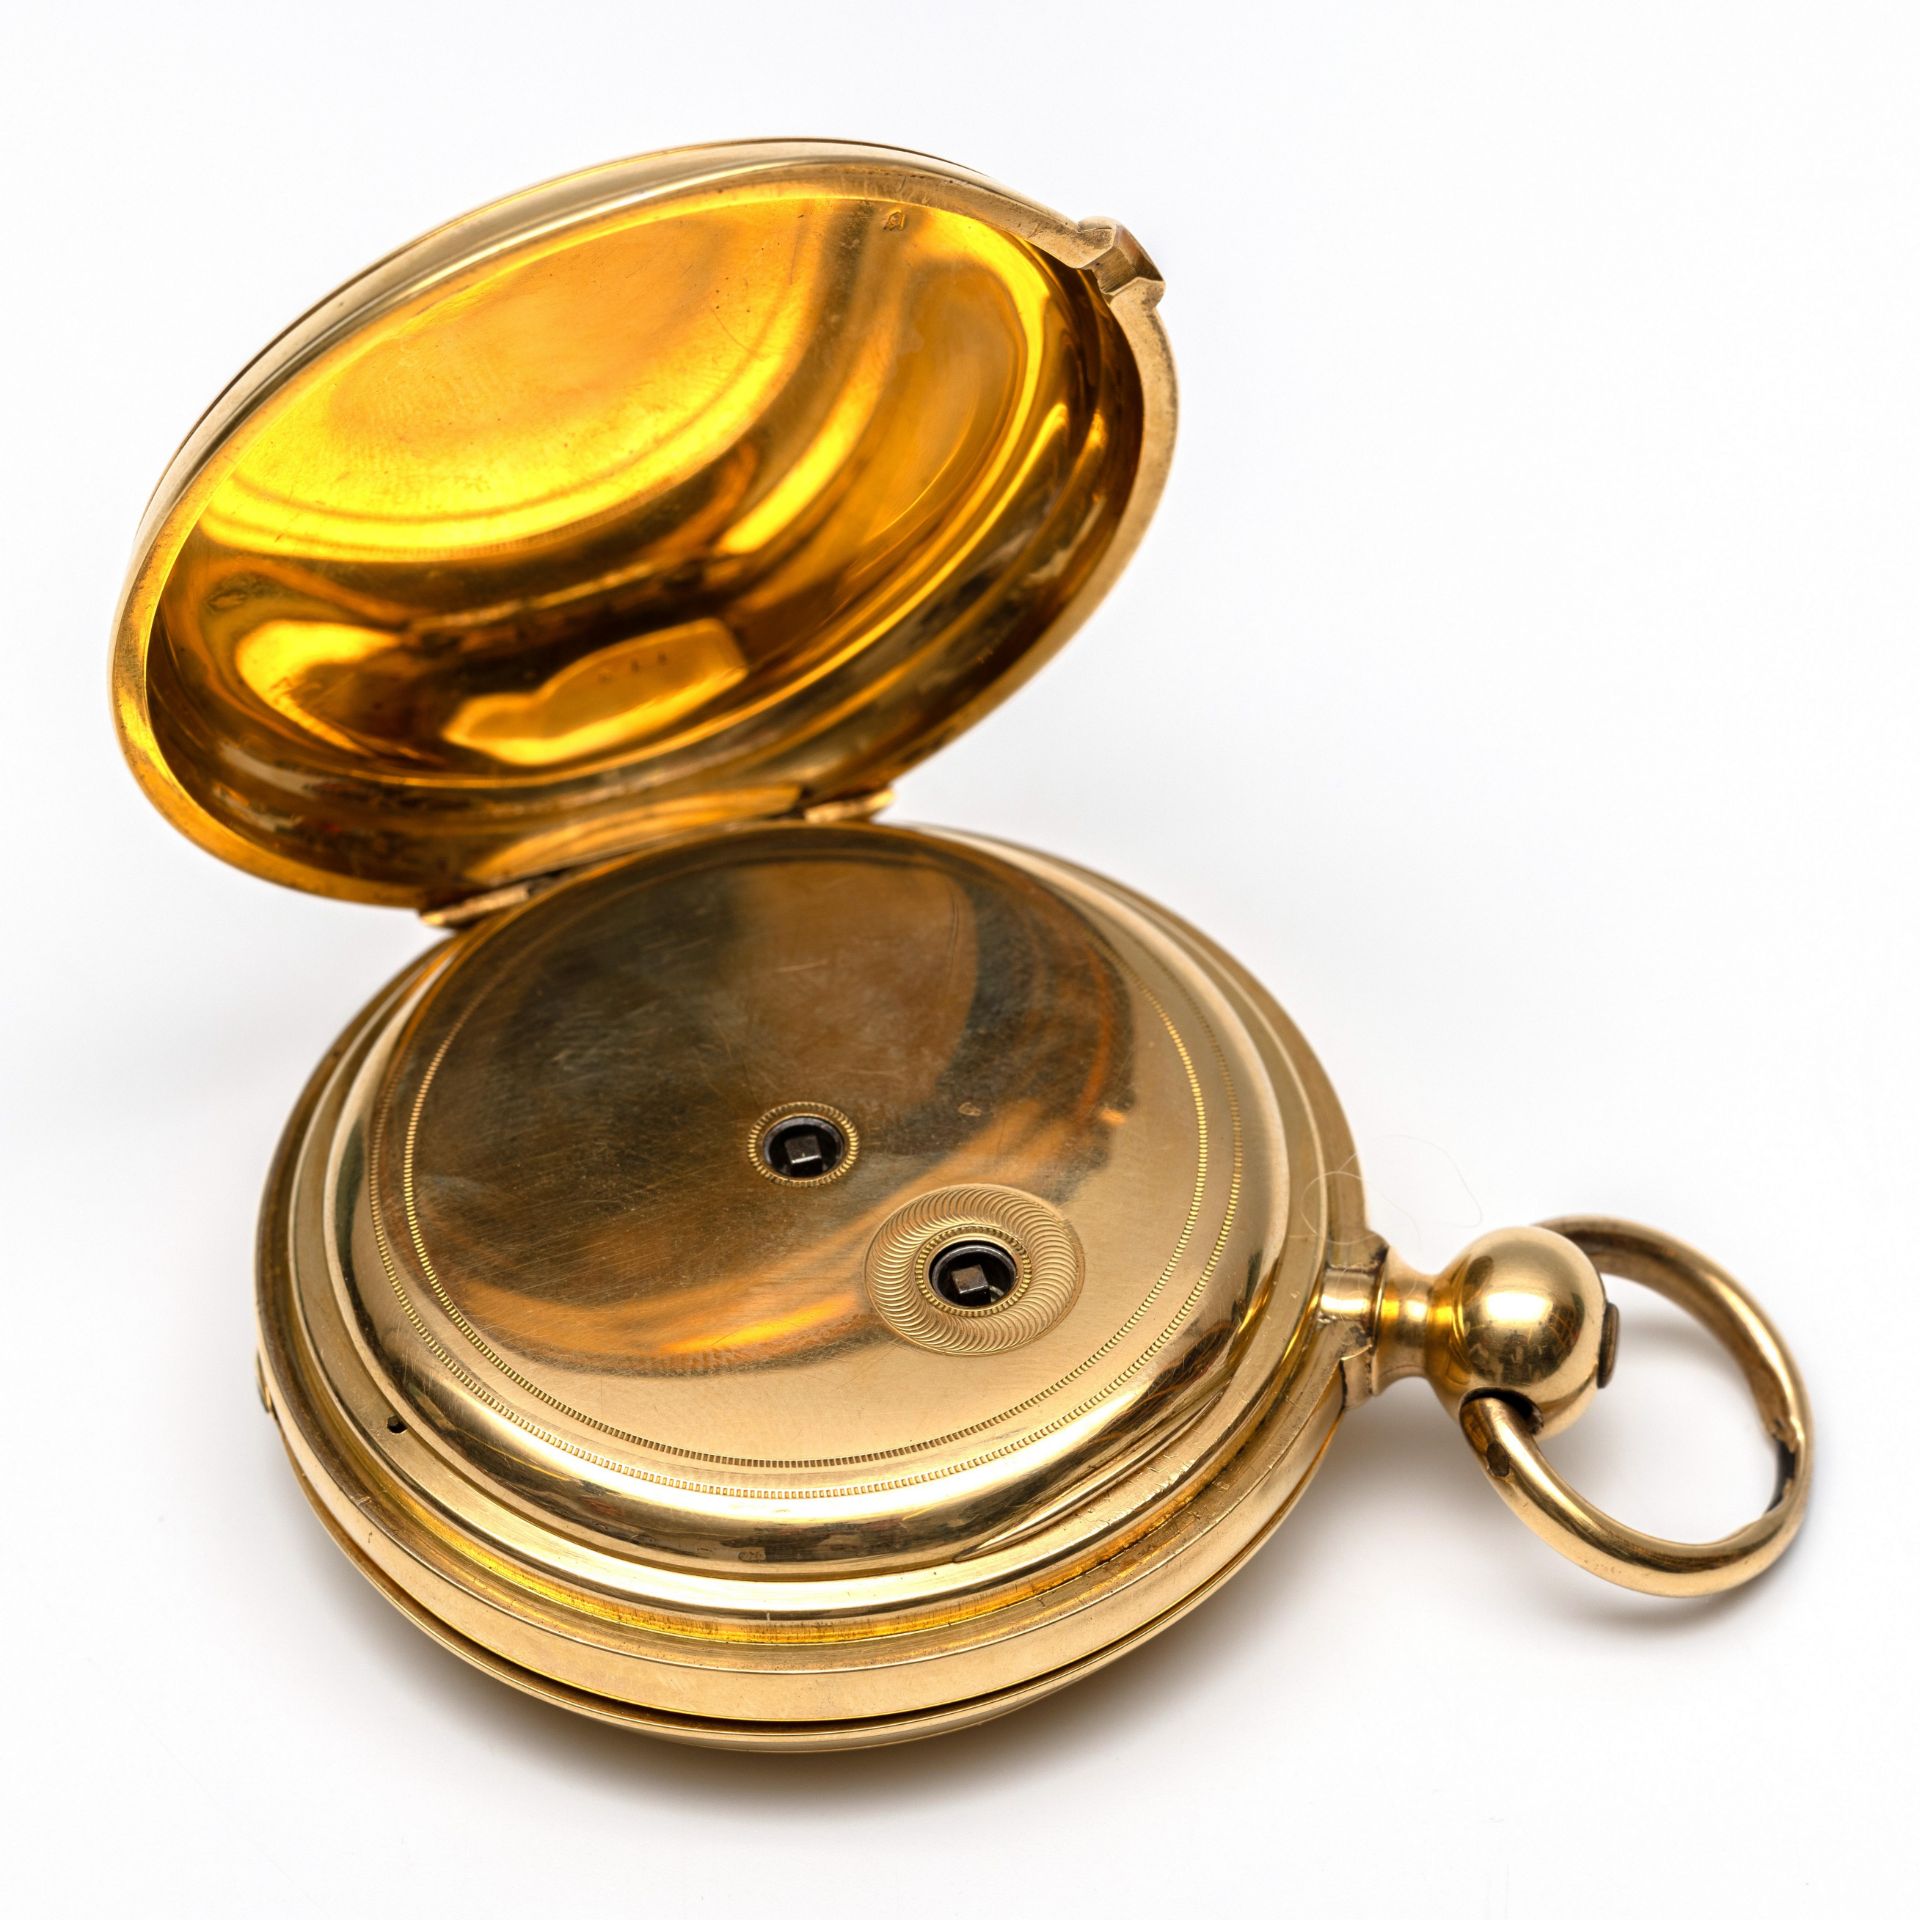 Frankrijk, mogelijk Henry Delolme, 18 kt. gouden chronometer zakhorloge met één-minuut tourbillon, c - Image 3 of 8